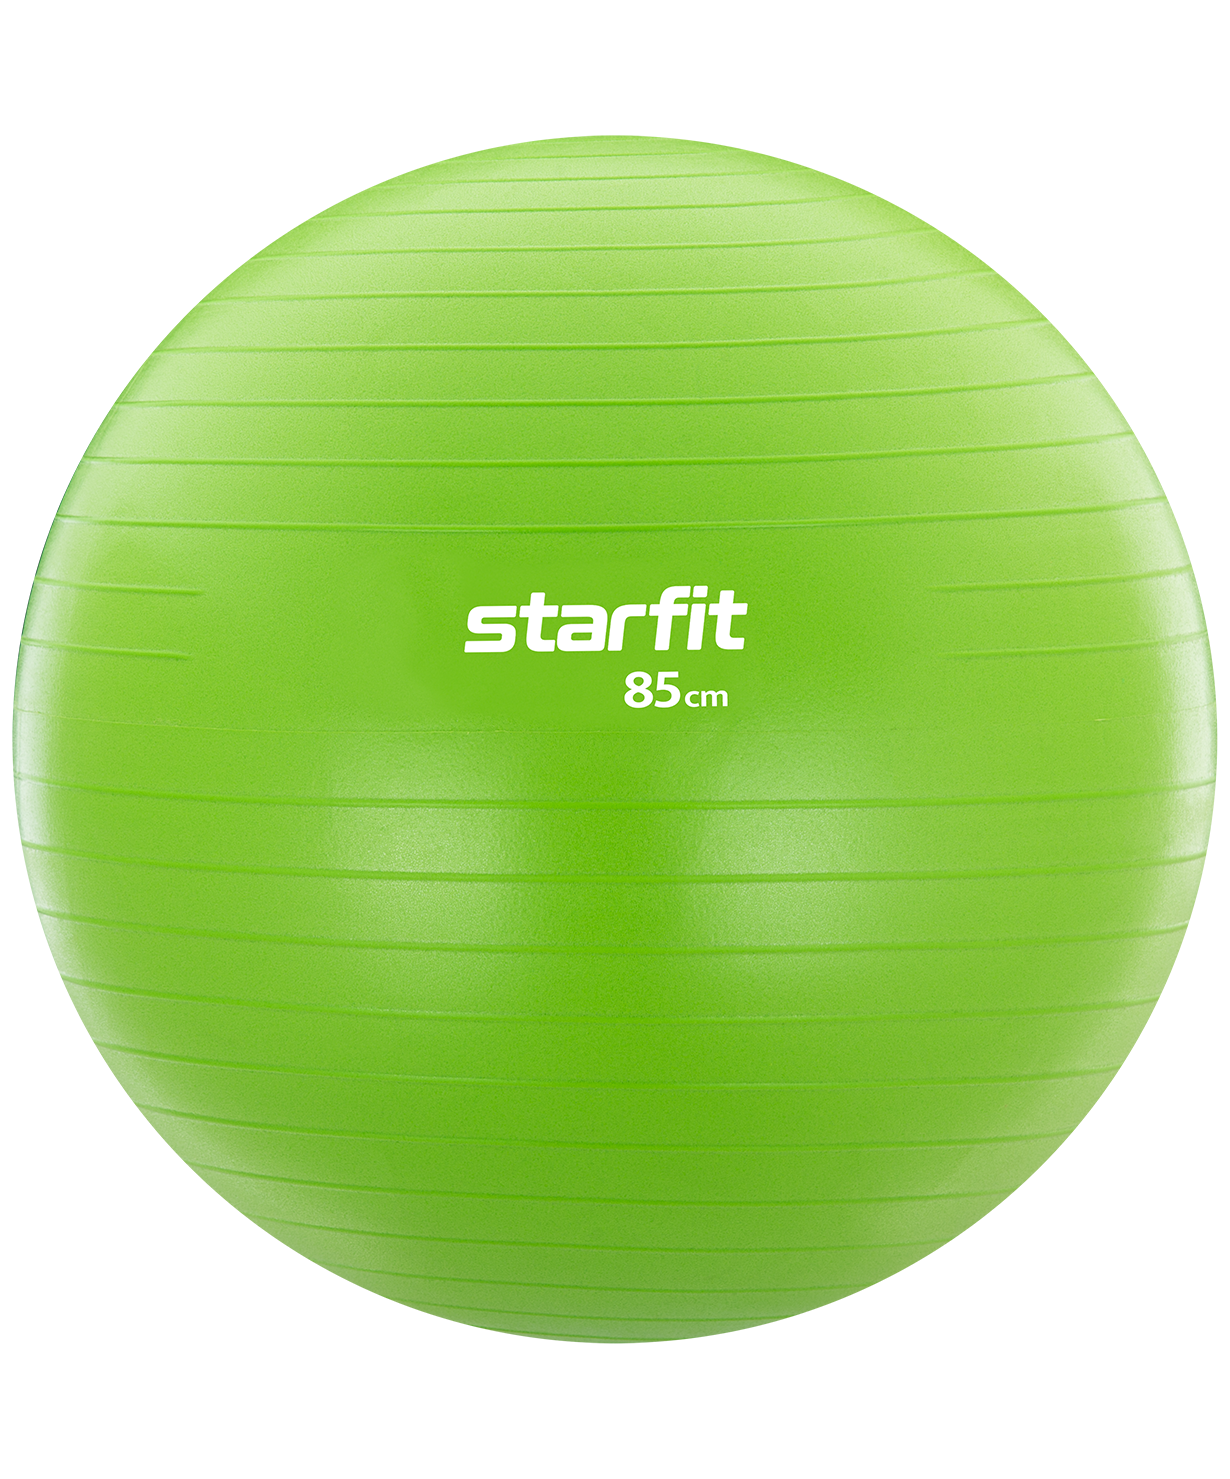 Без упаковки фитбол Starfit Gb-104, 85 см, 1500 гр, без насоса, зеленый, антивзрыв